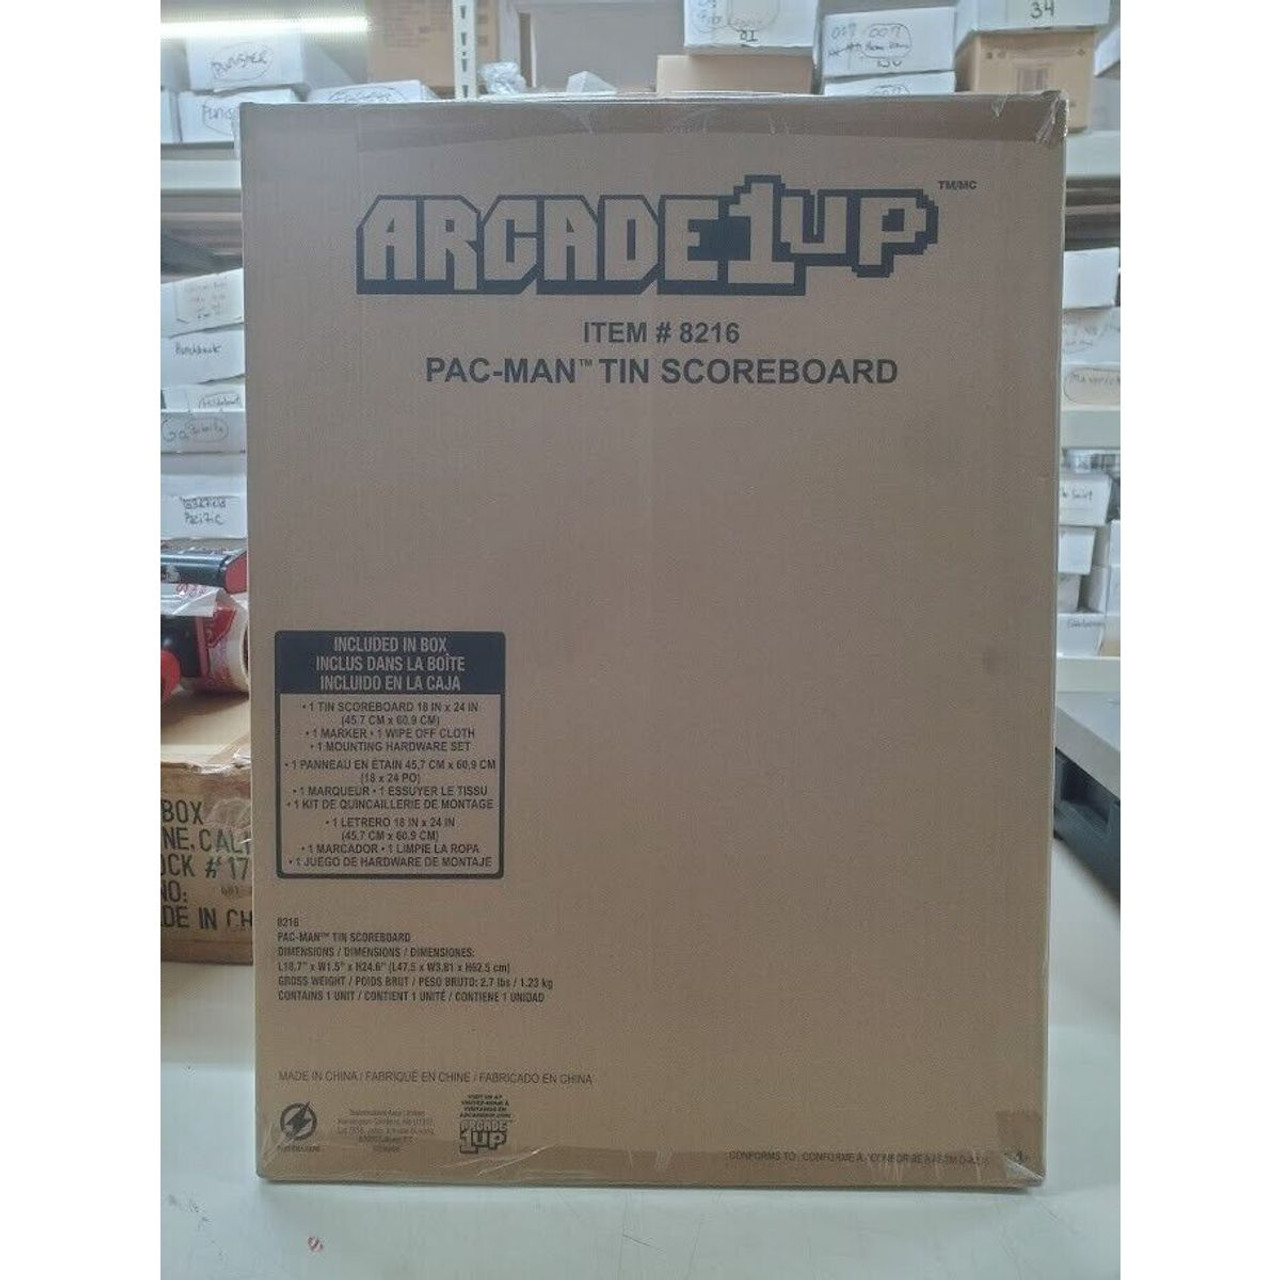 ARCADE1up PAC-MAN Tin Scoreboard and Dry Erase Kit product image